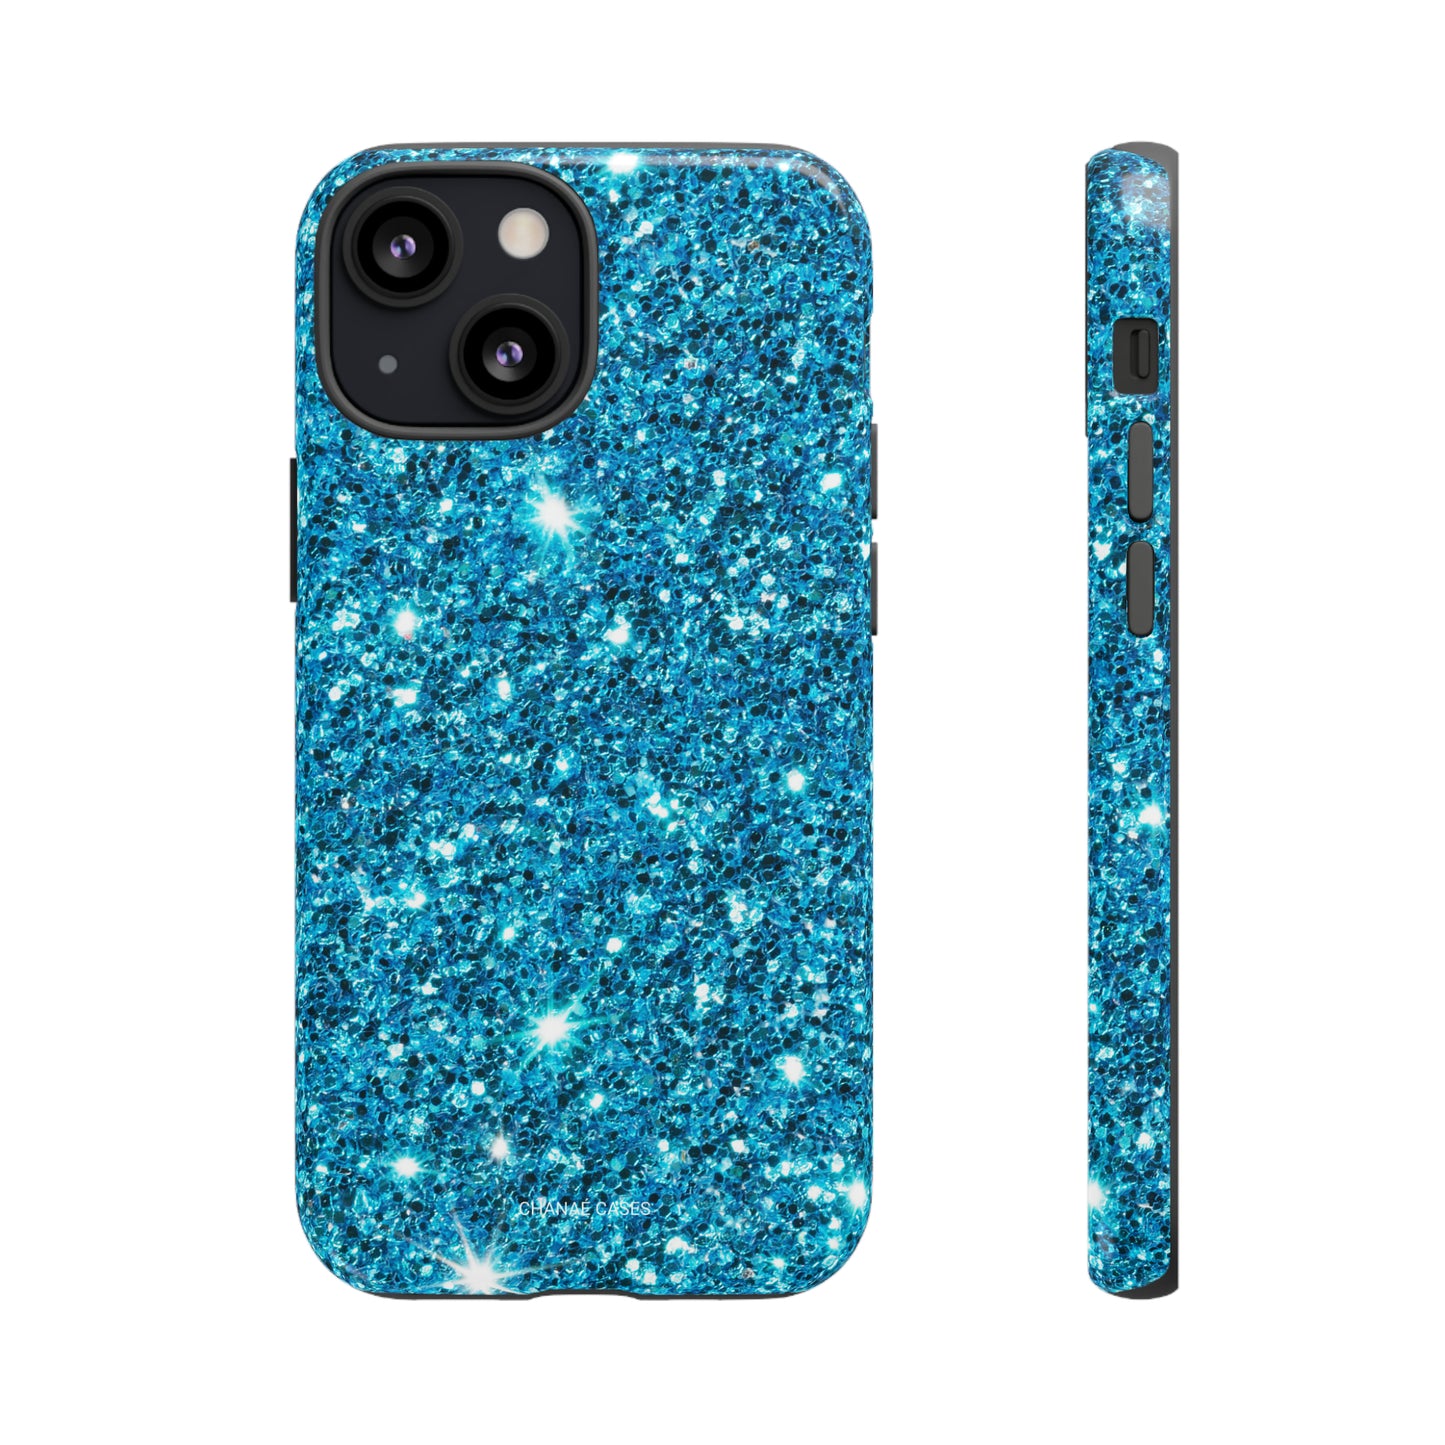 Carnival Diva iPhone "Tough" Case (Blue)